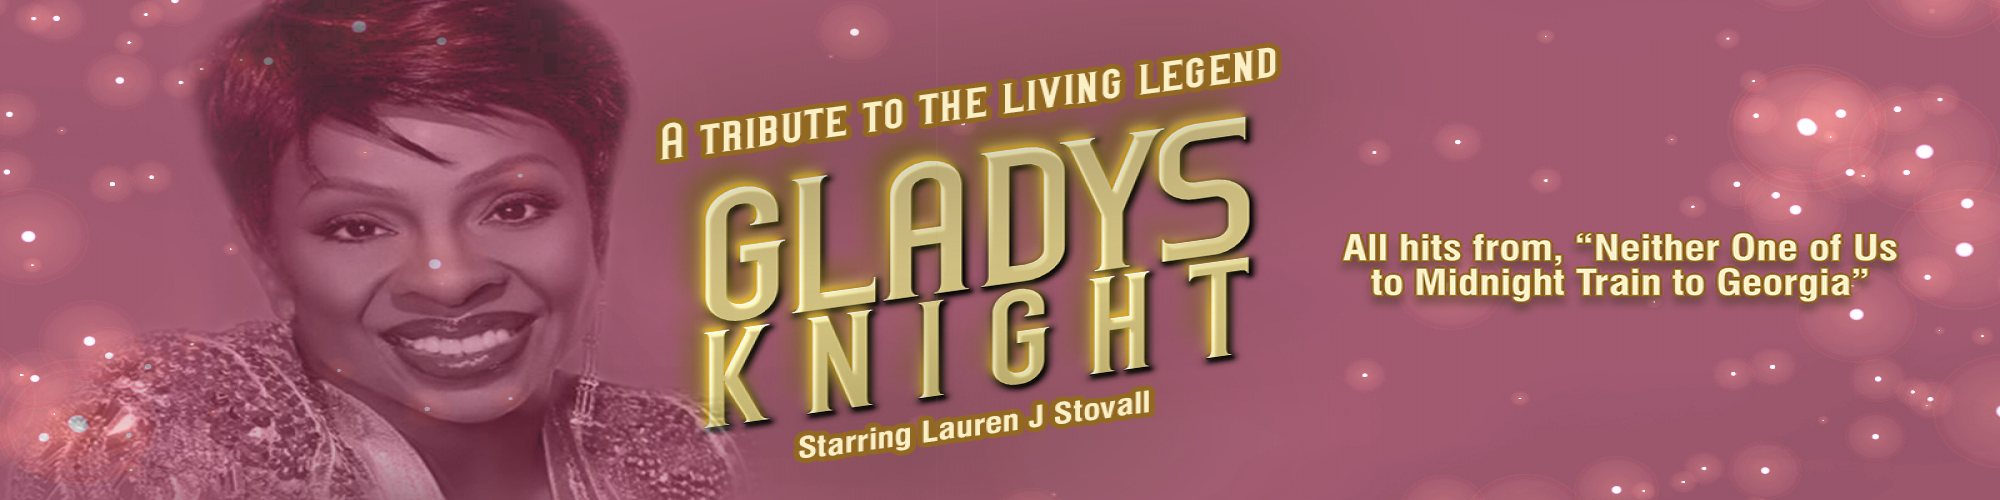 GLADYS KNIGHT - starring Lauren J. Stovall (Starlight Cabaret)